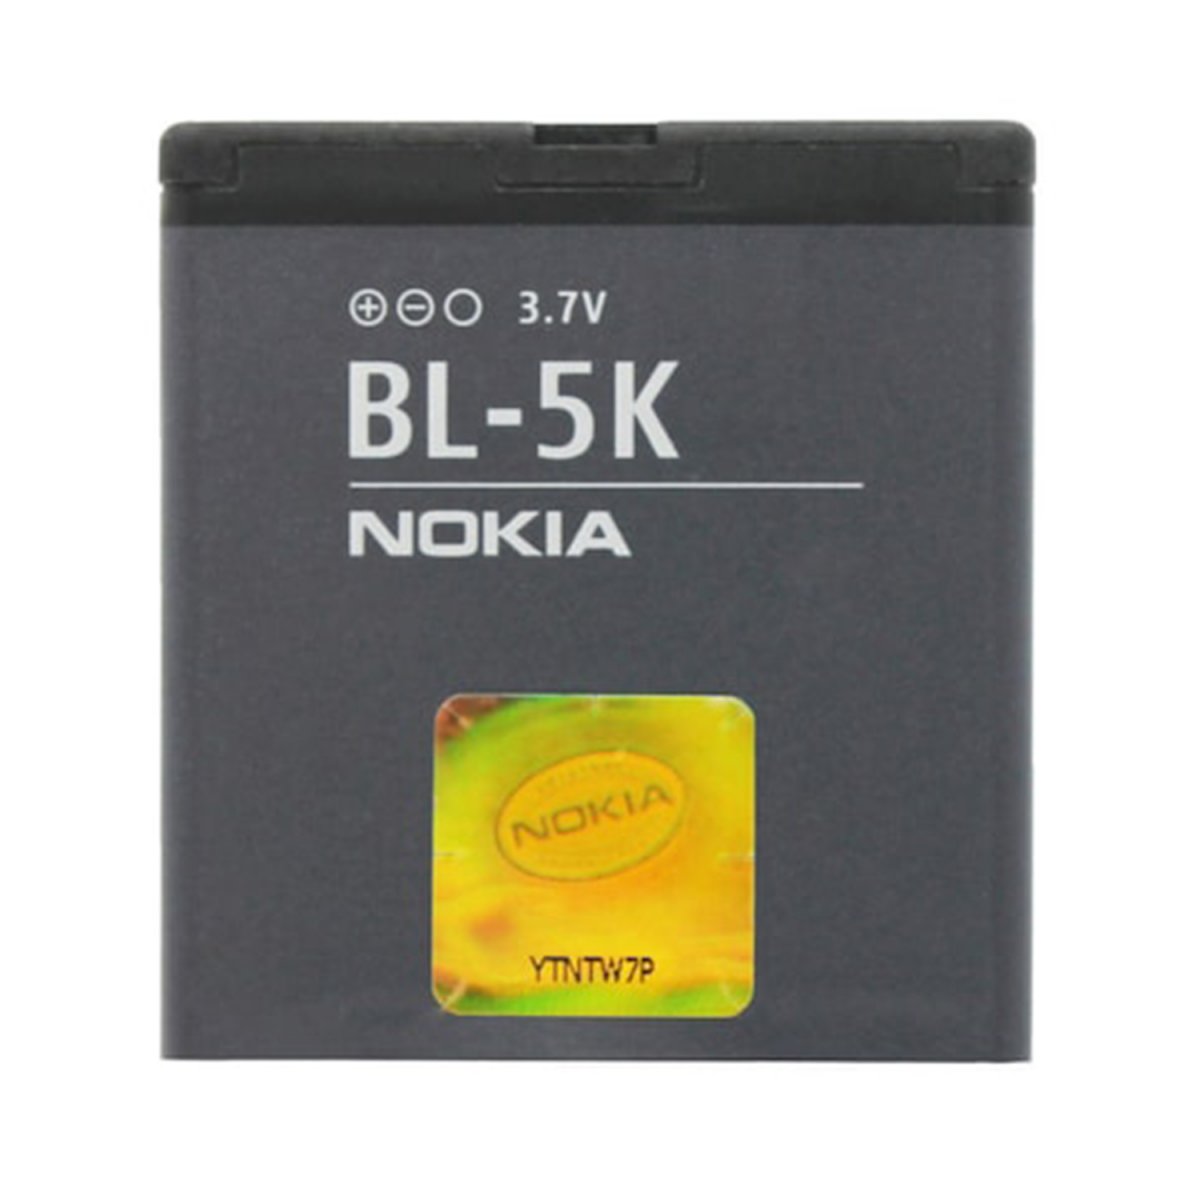 K battery. Аккумулятор Nokia BL-5k. Nokia c7 аккумулятор. Аккумулятор Explay q230 и Nokia BL-5k совместимость. Аккумулятор для Nokia x7.